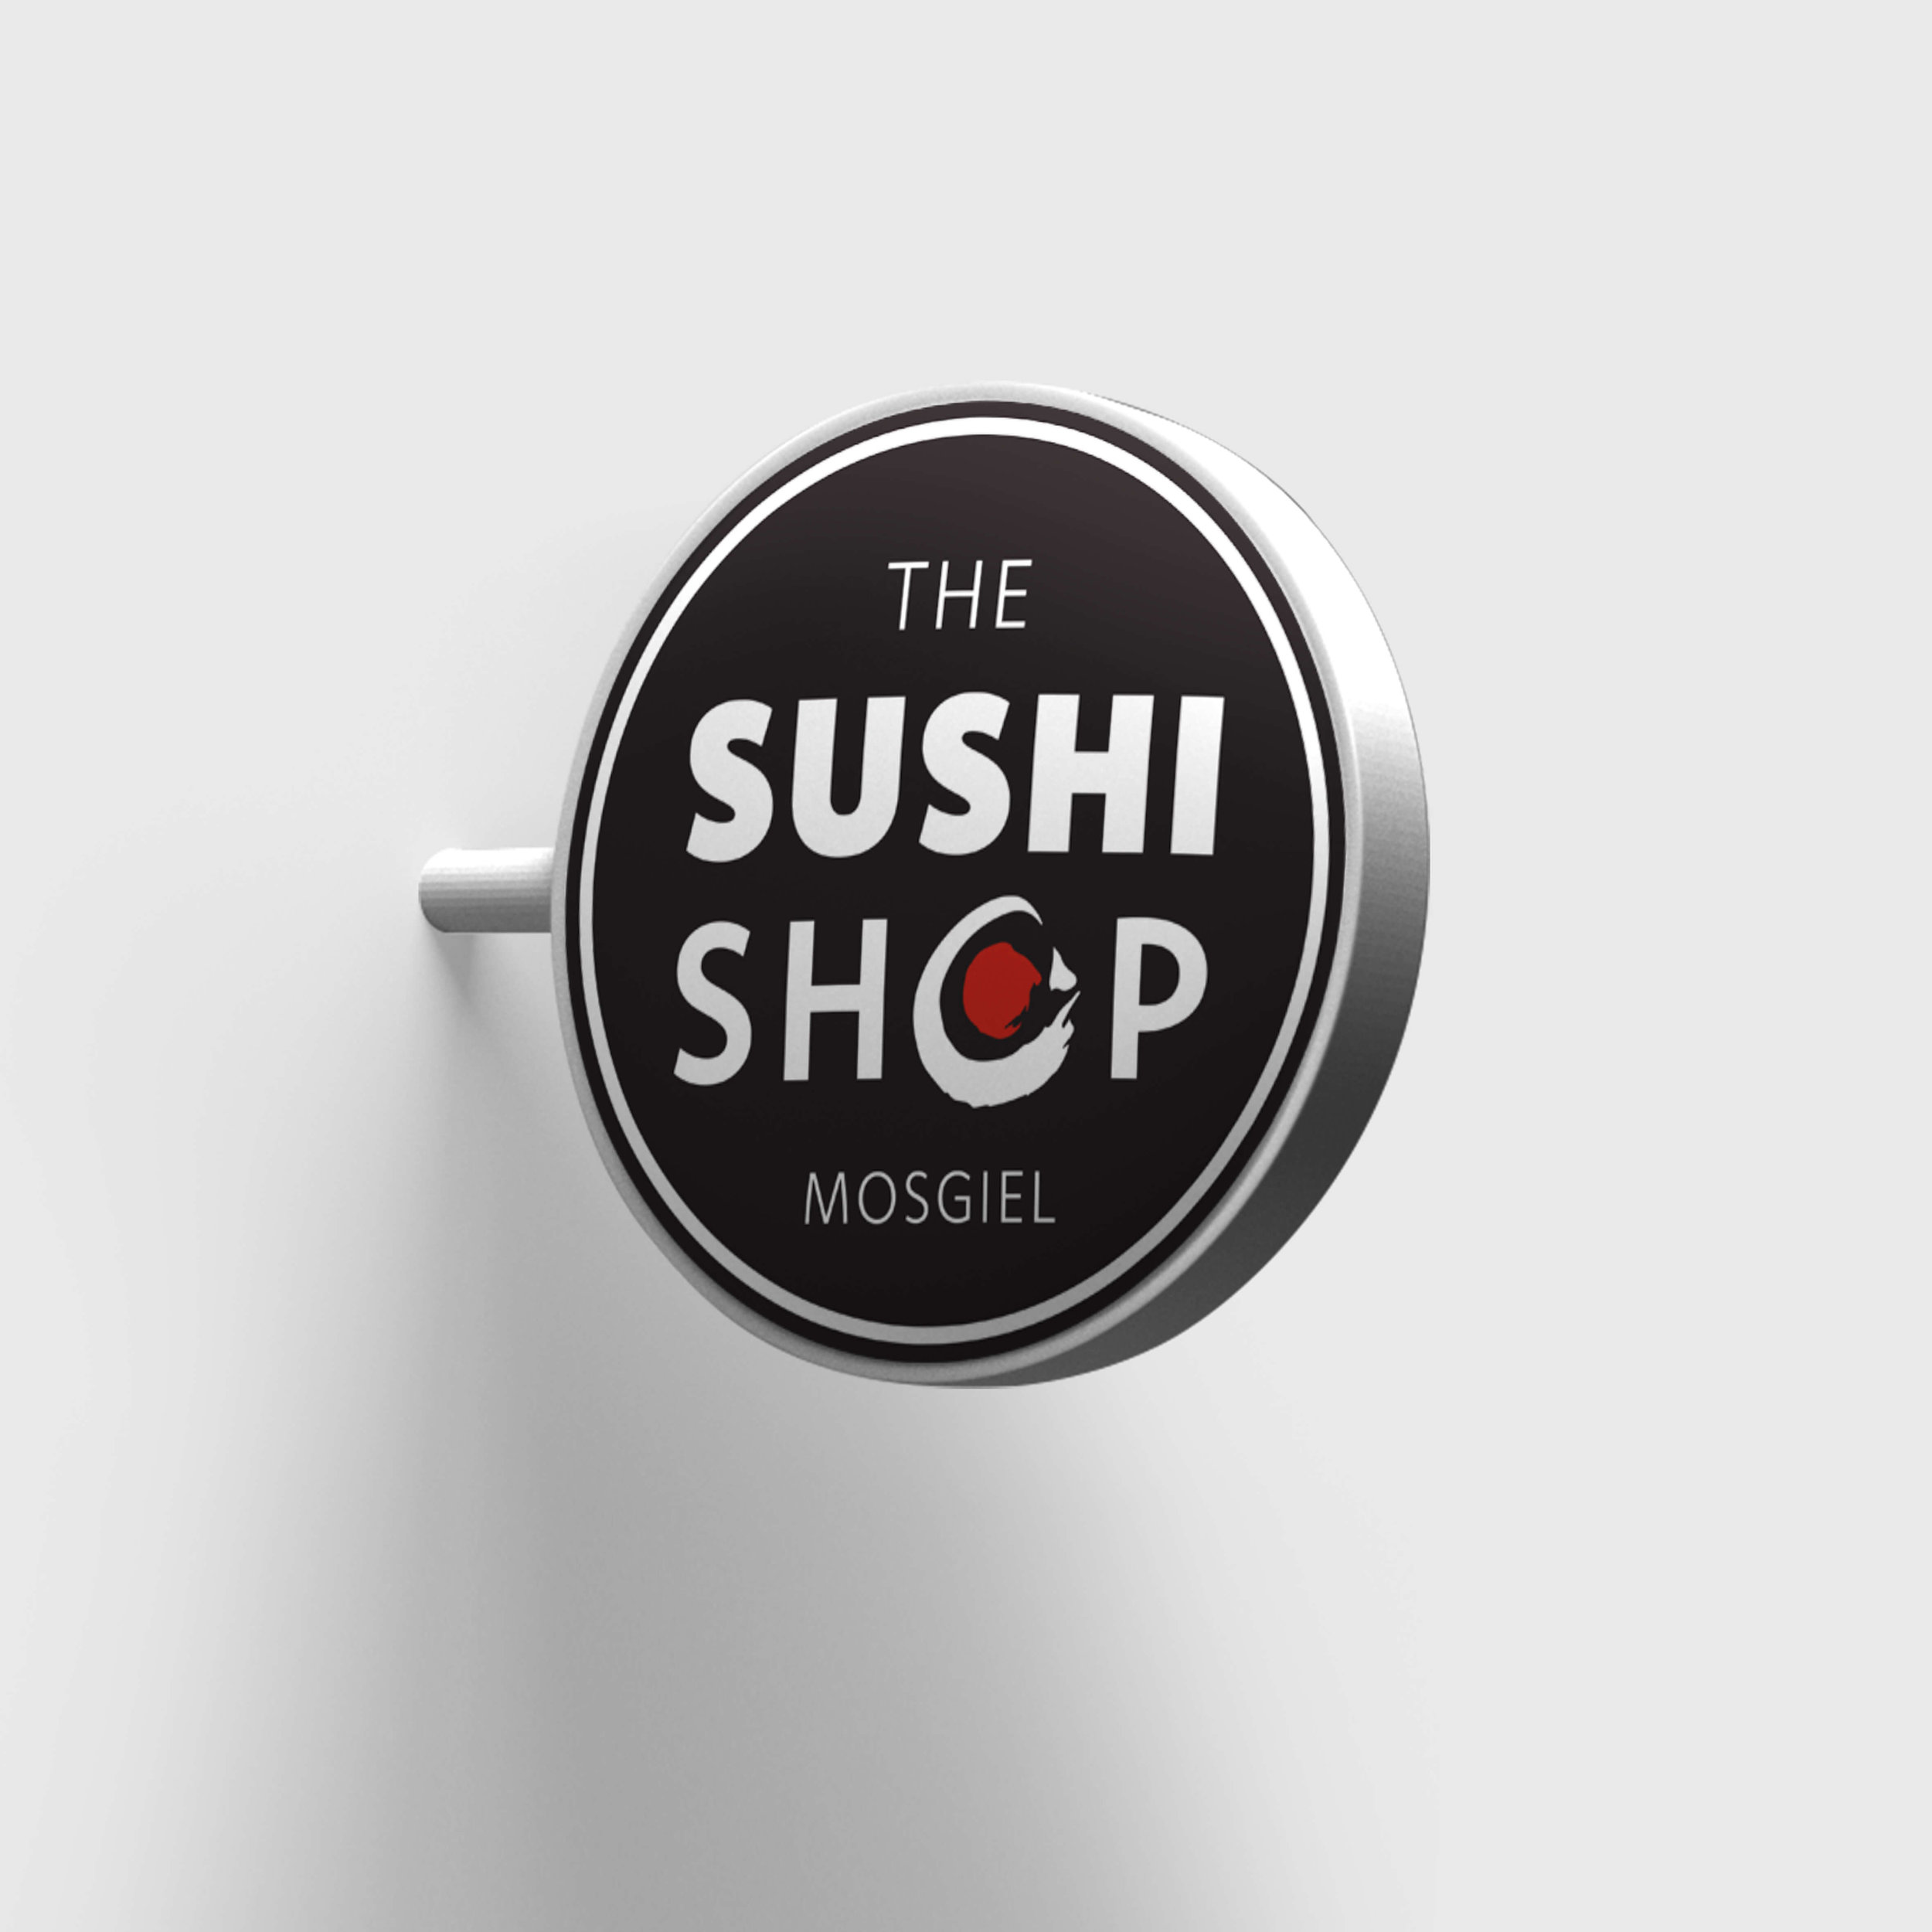 The Sushi Shop